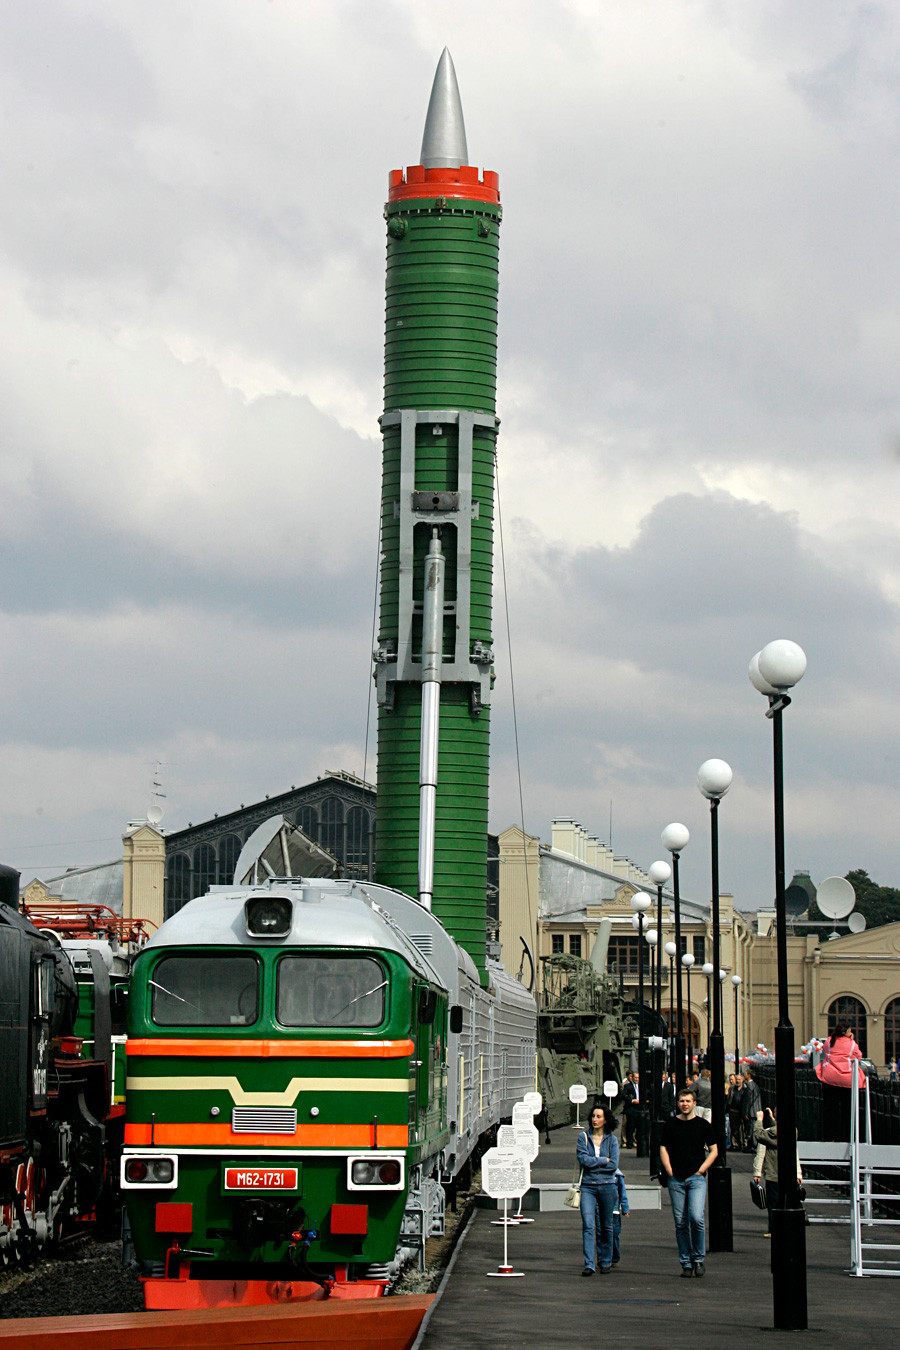 Train-mounted RT-23 intercontinental strategic missile